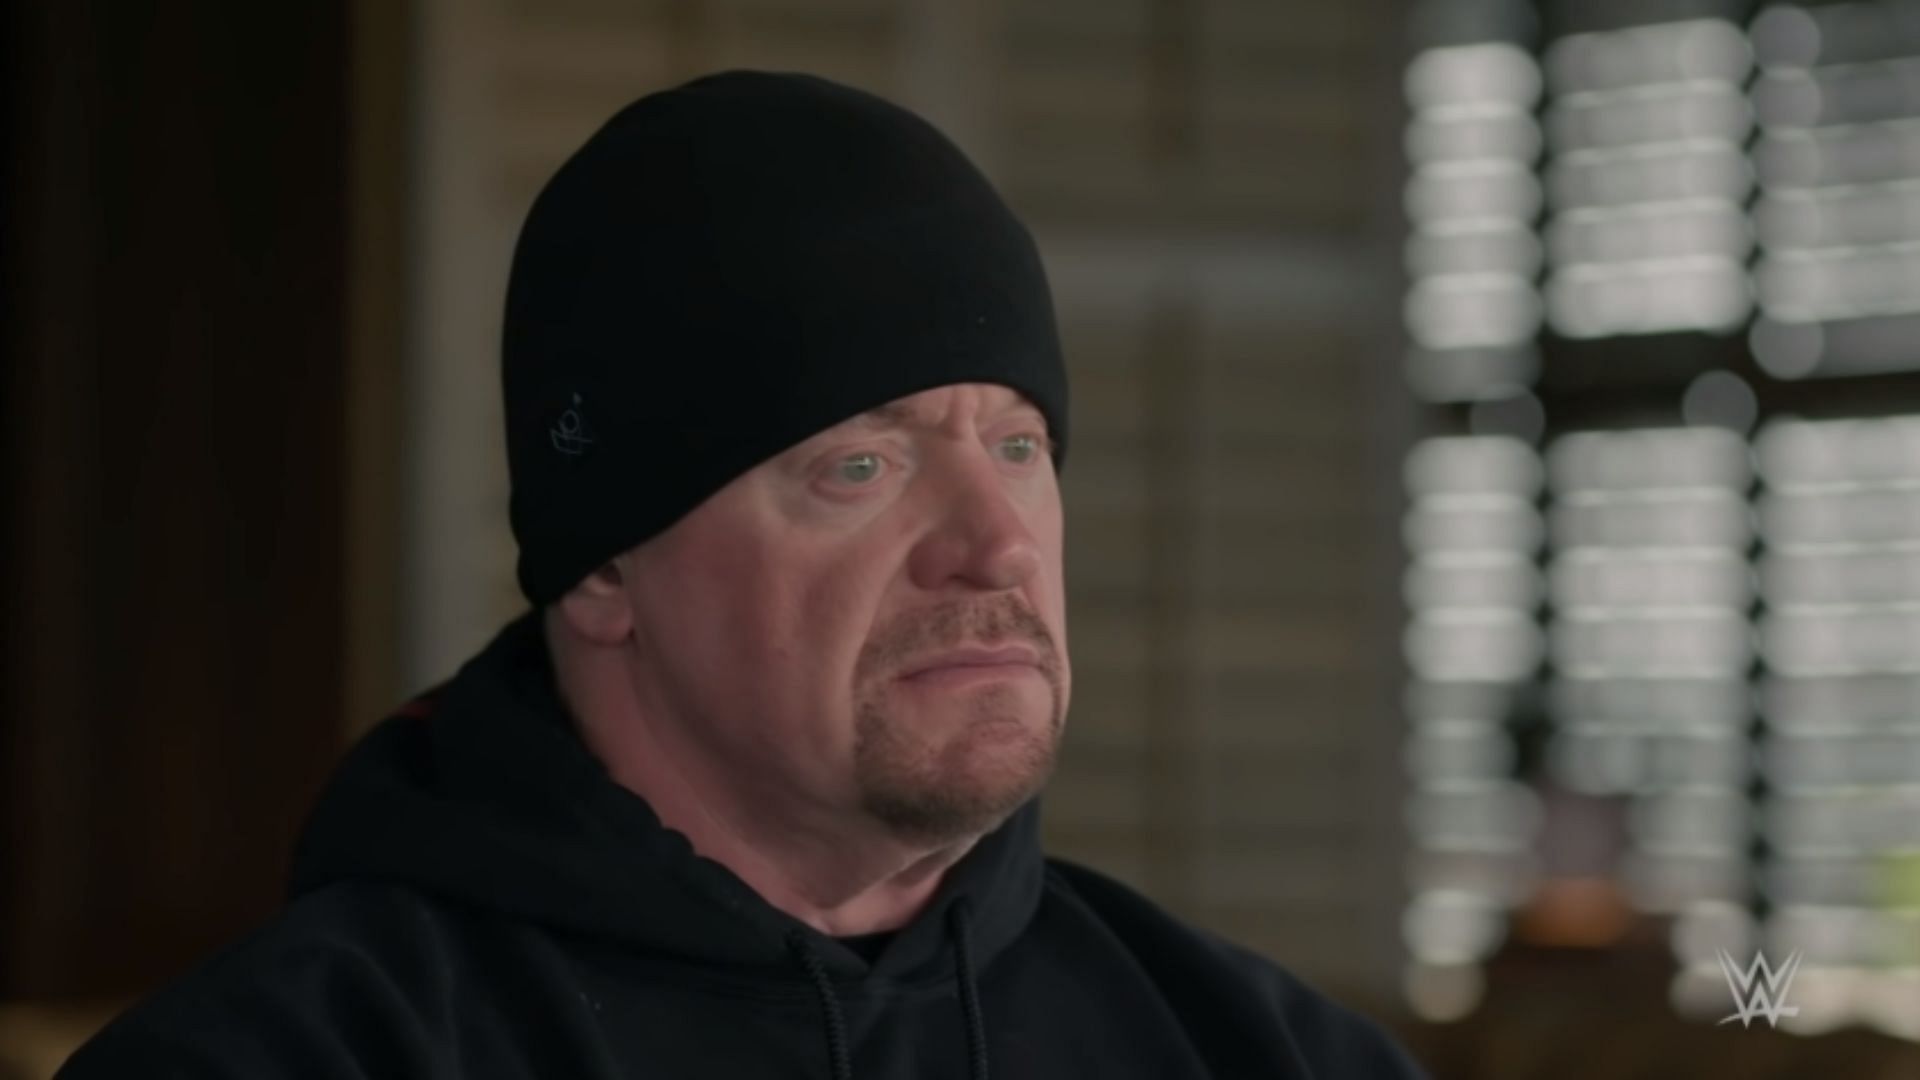 The Undertaker was viewed by many as a locker-room leader in WWE.